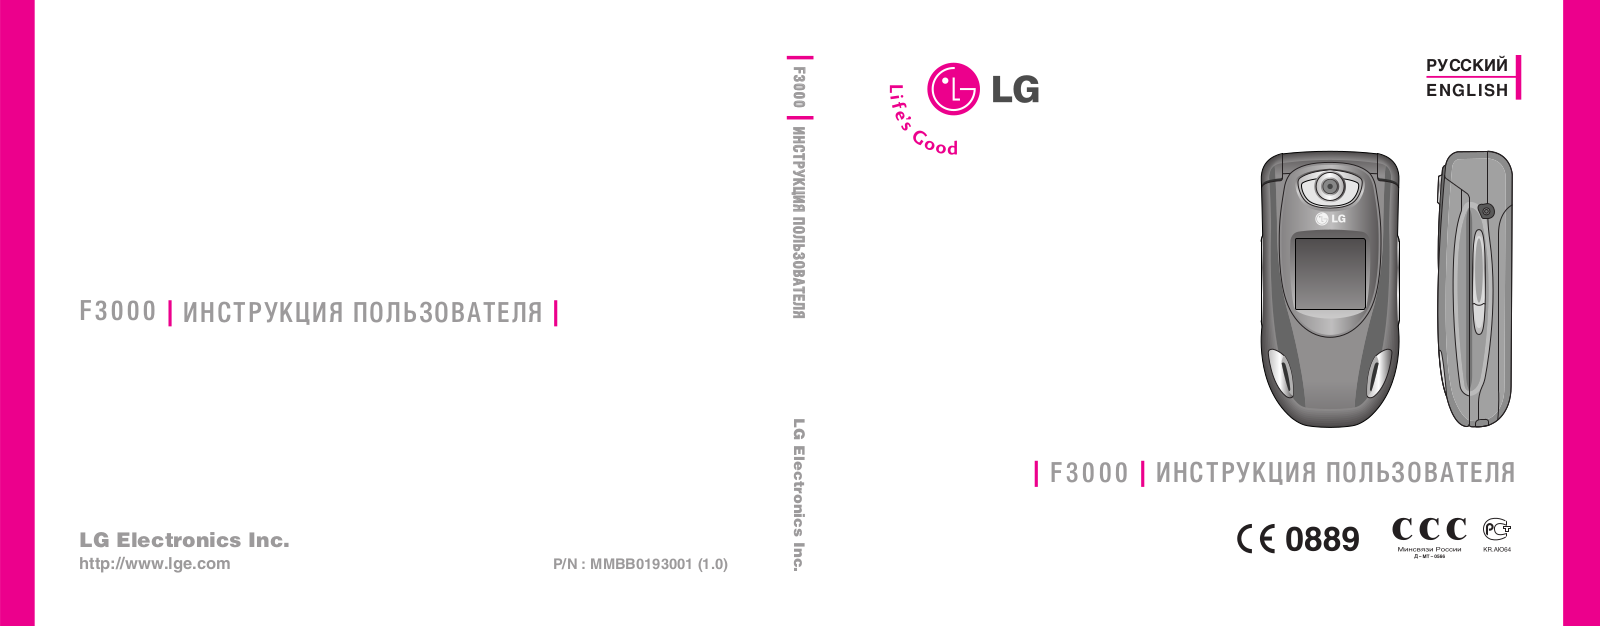 LG F3000 User Manual